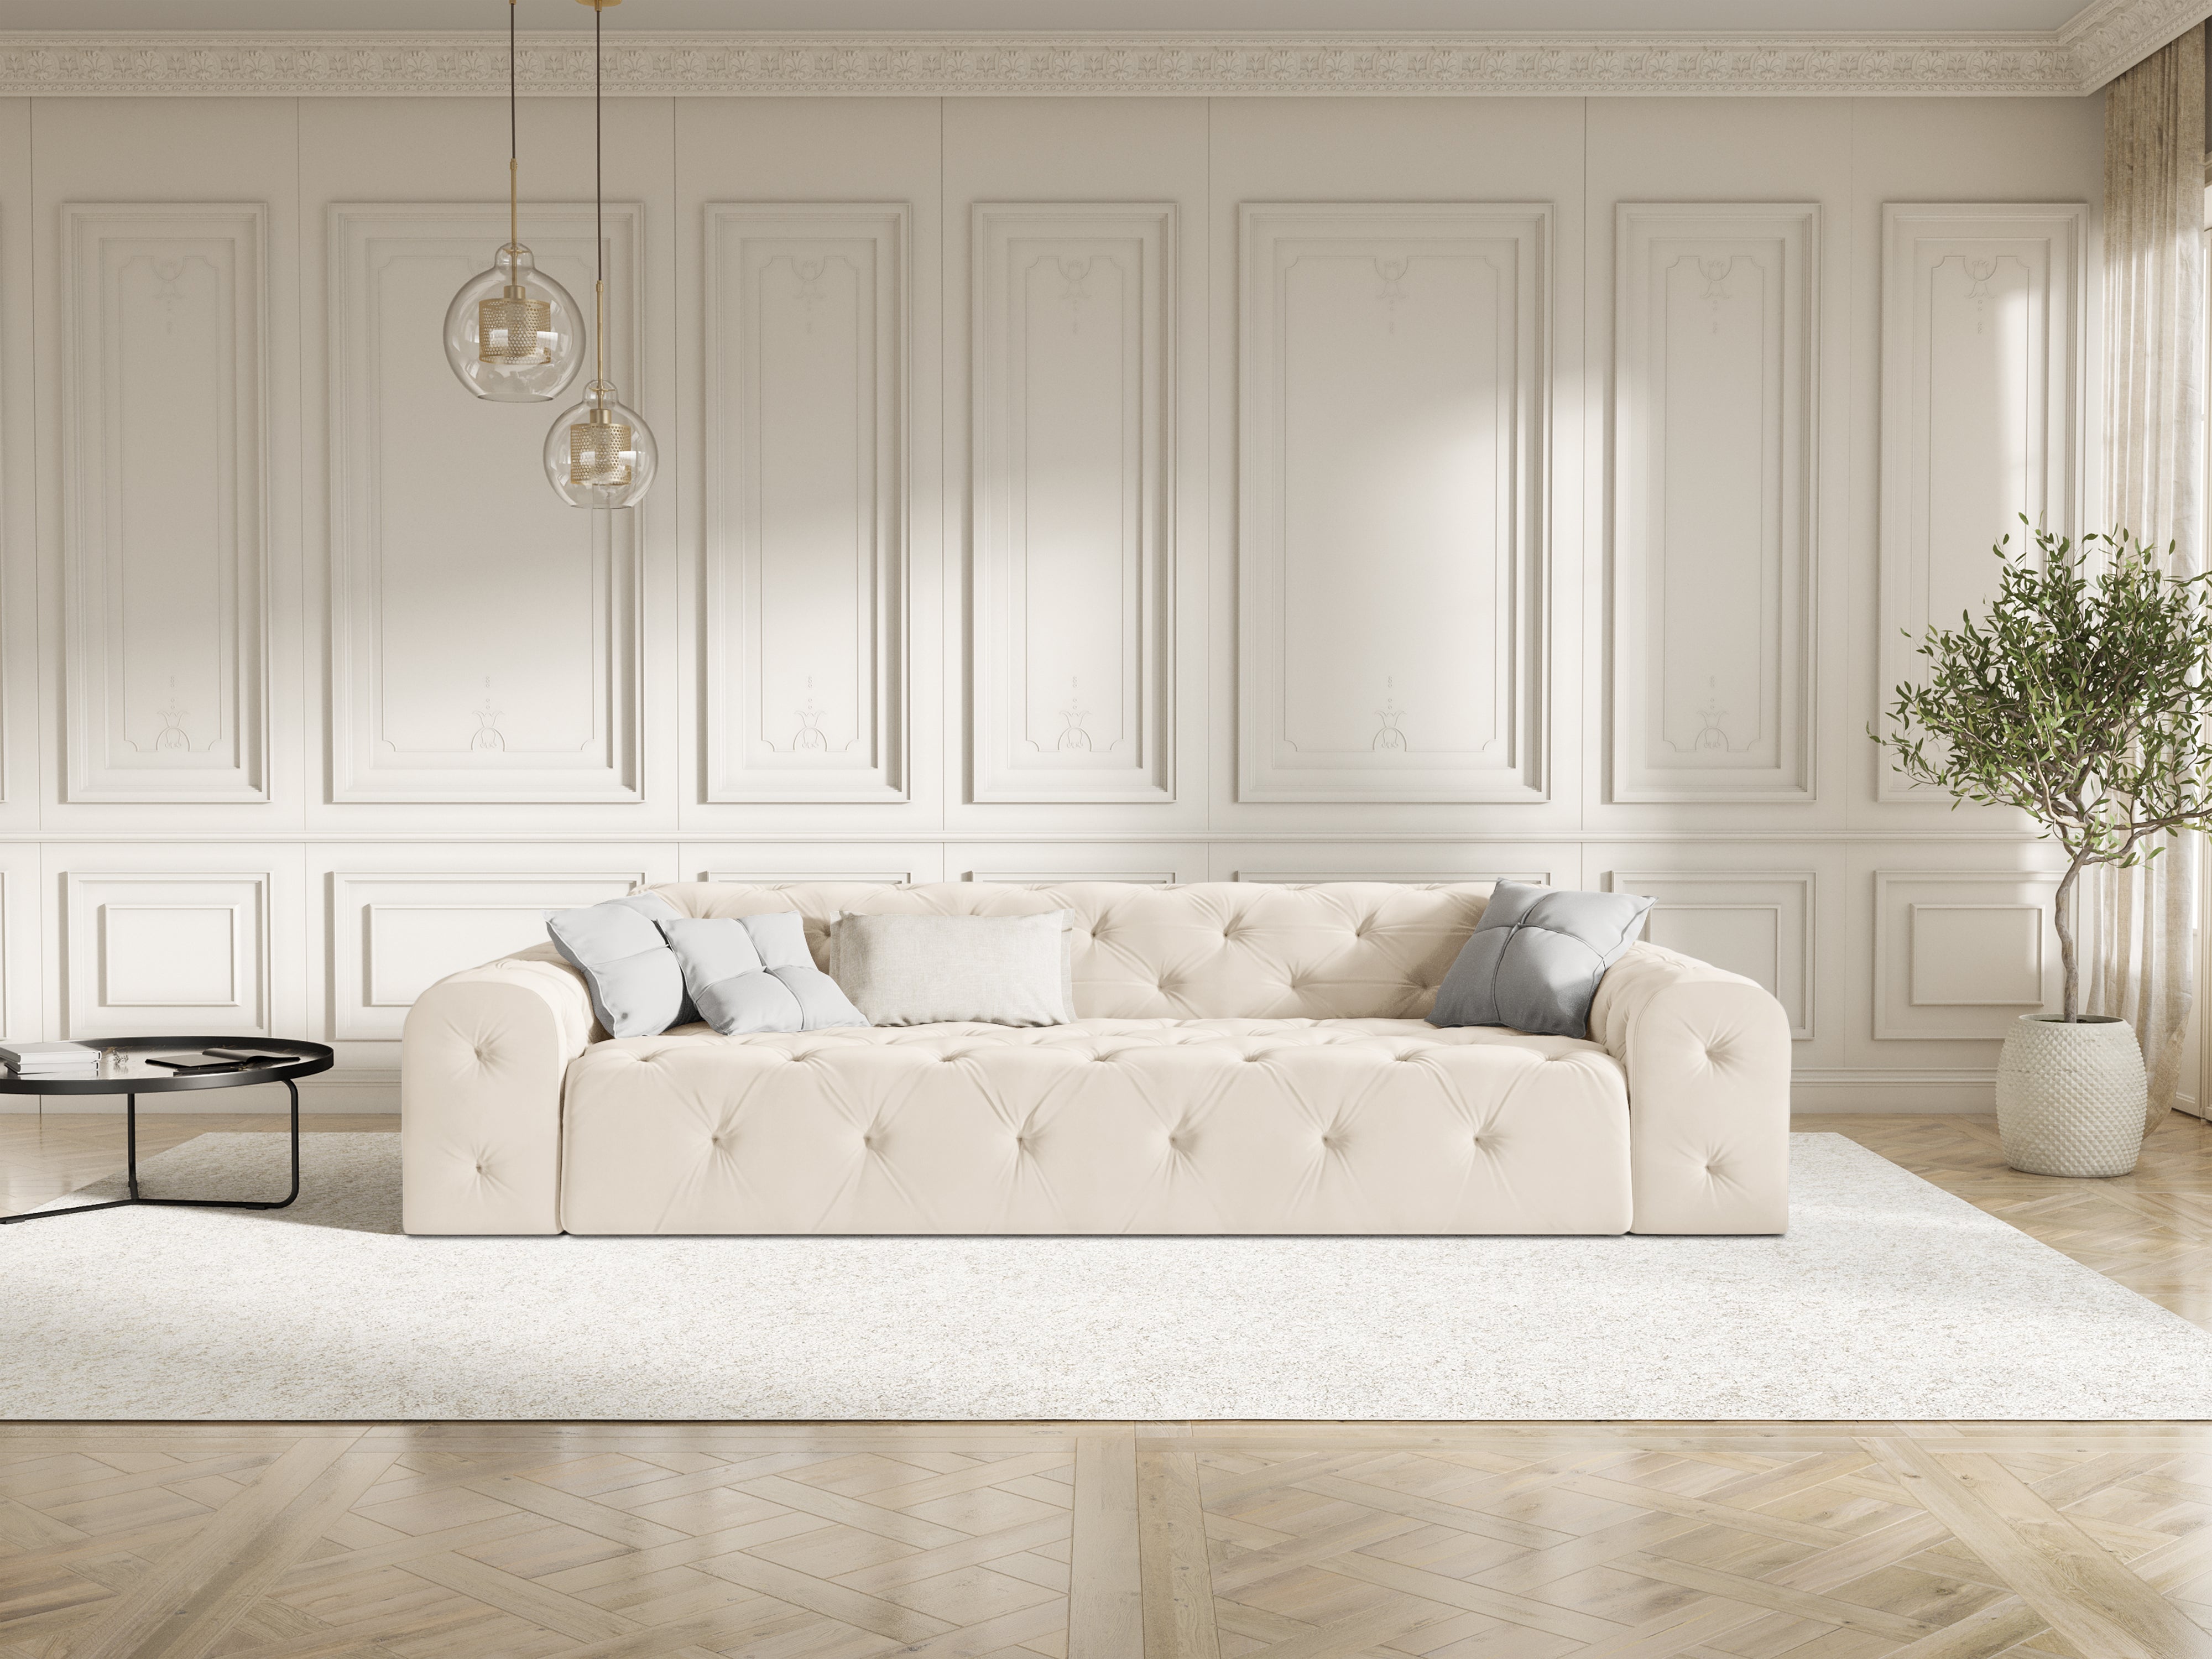 Velvet Sofa, "Candice", 4 Seats, 255x94x80
Made in Europe, Micadoni, Eye on Design